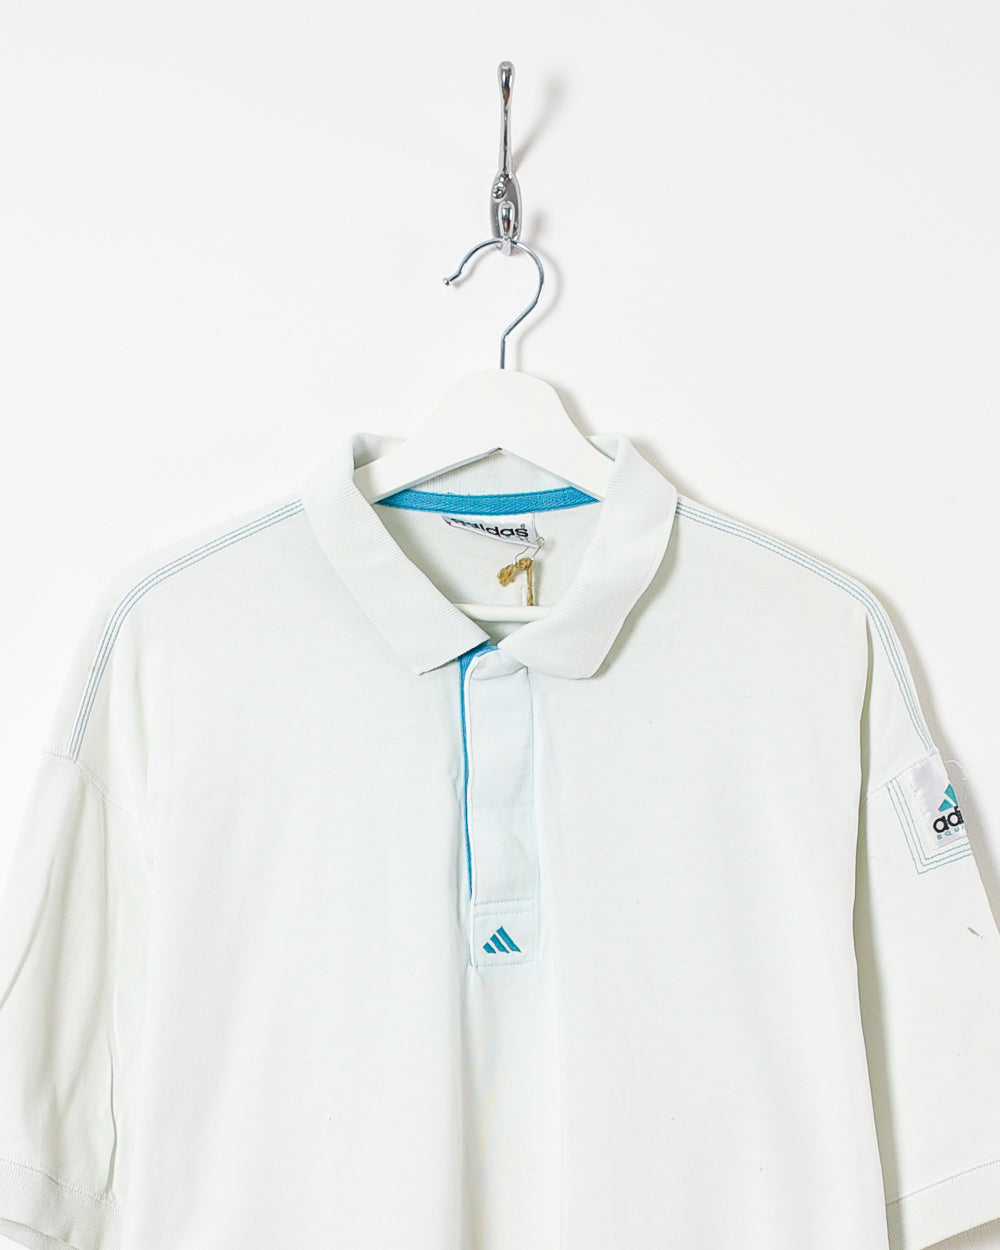 White Adidas Equipment Polo Shirt - X-Large